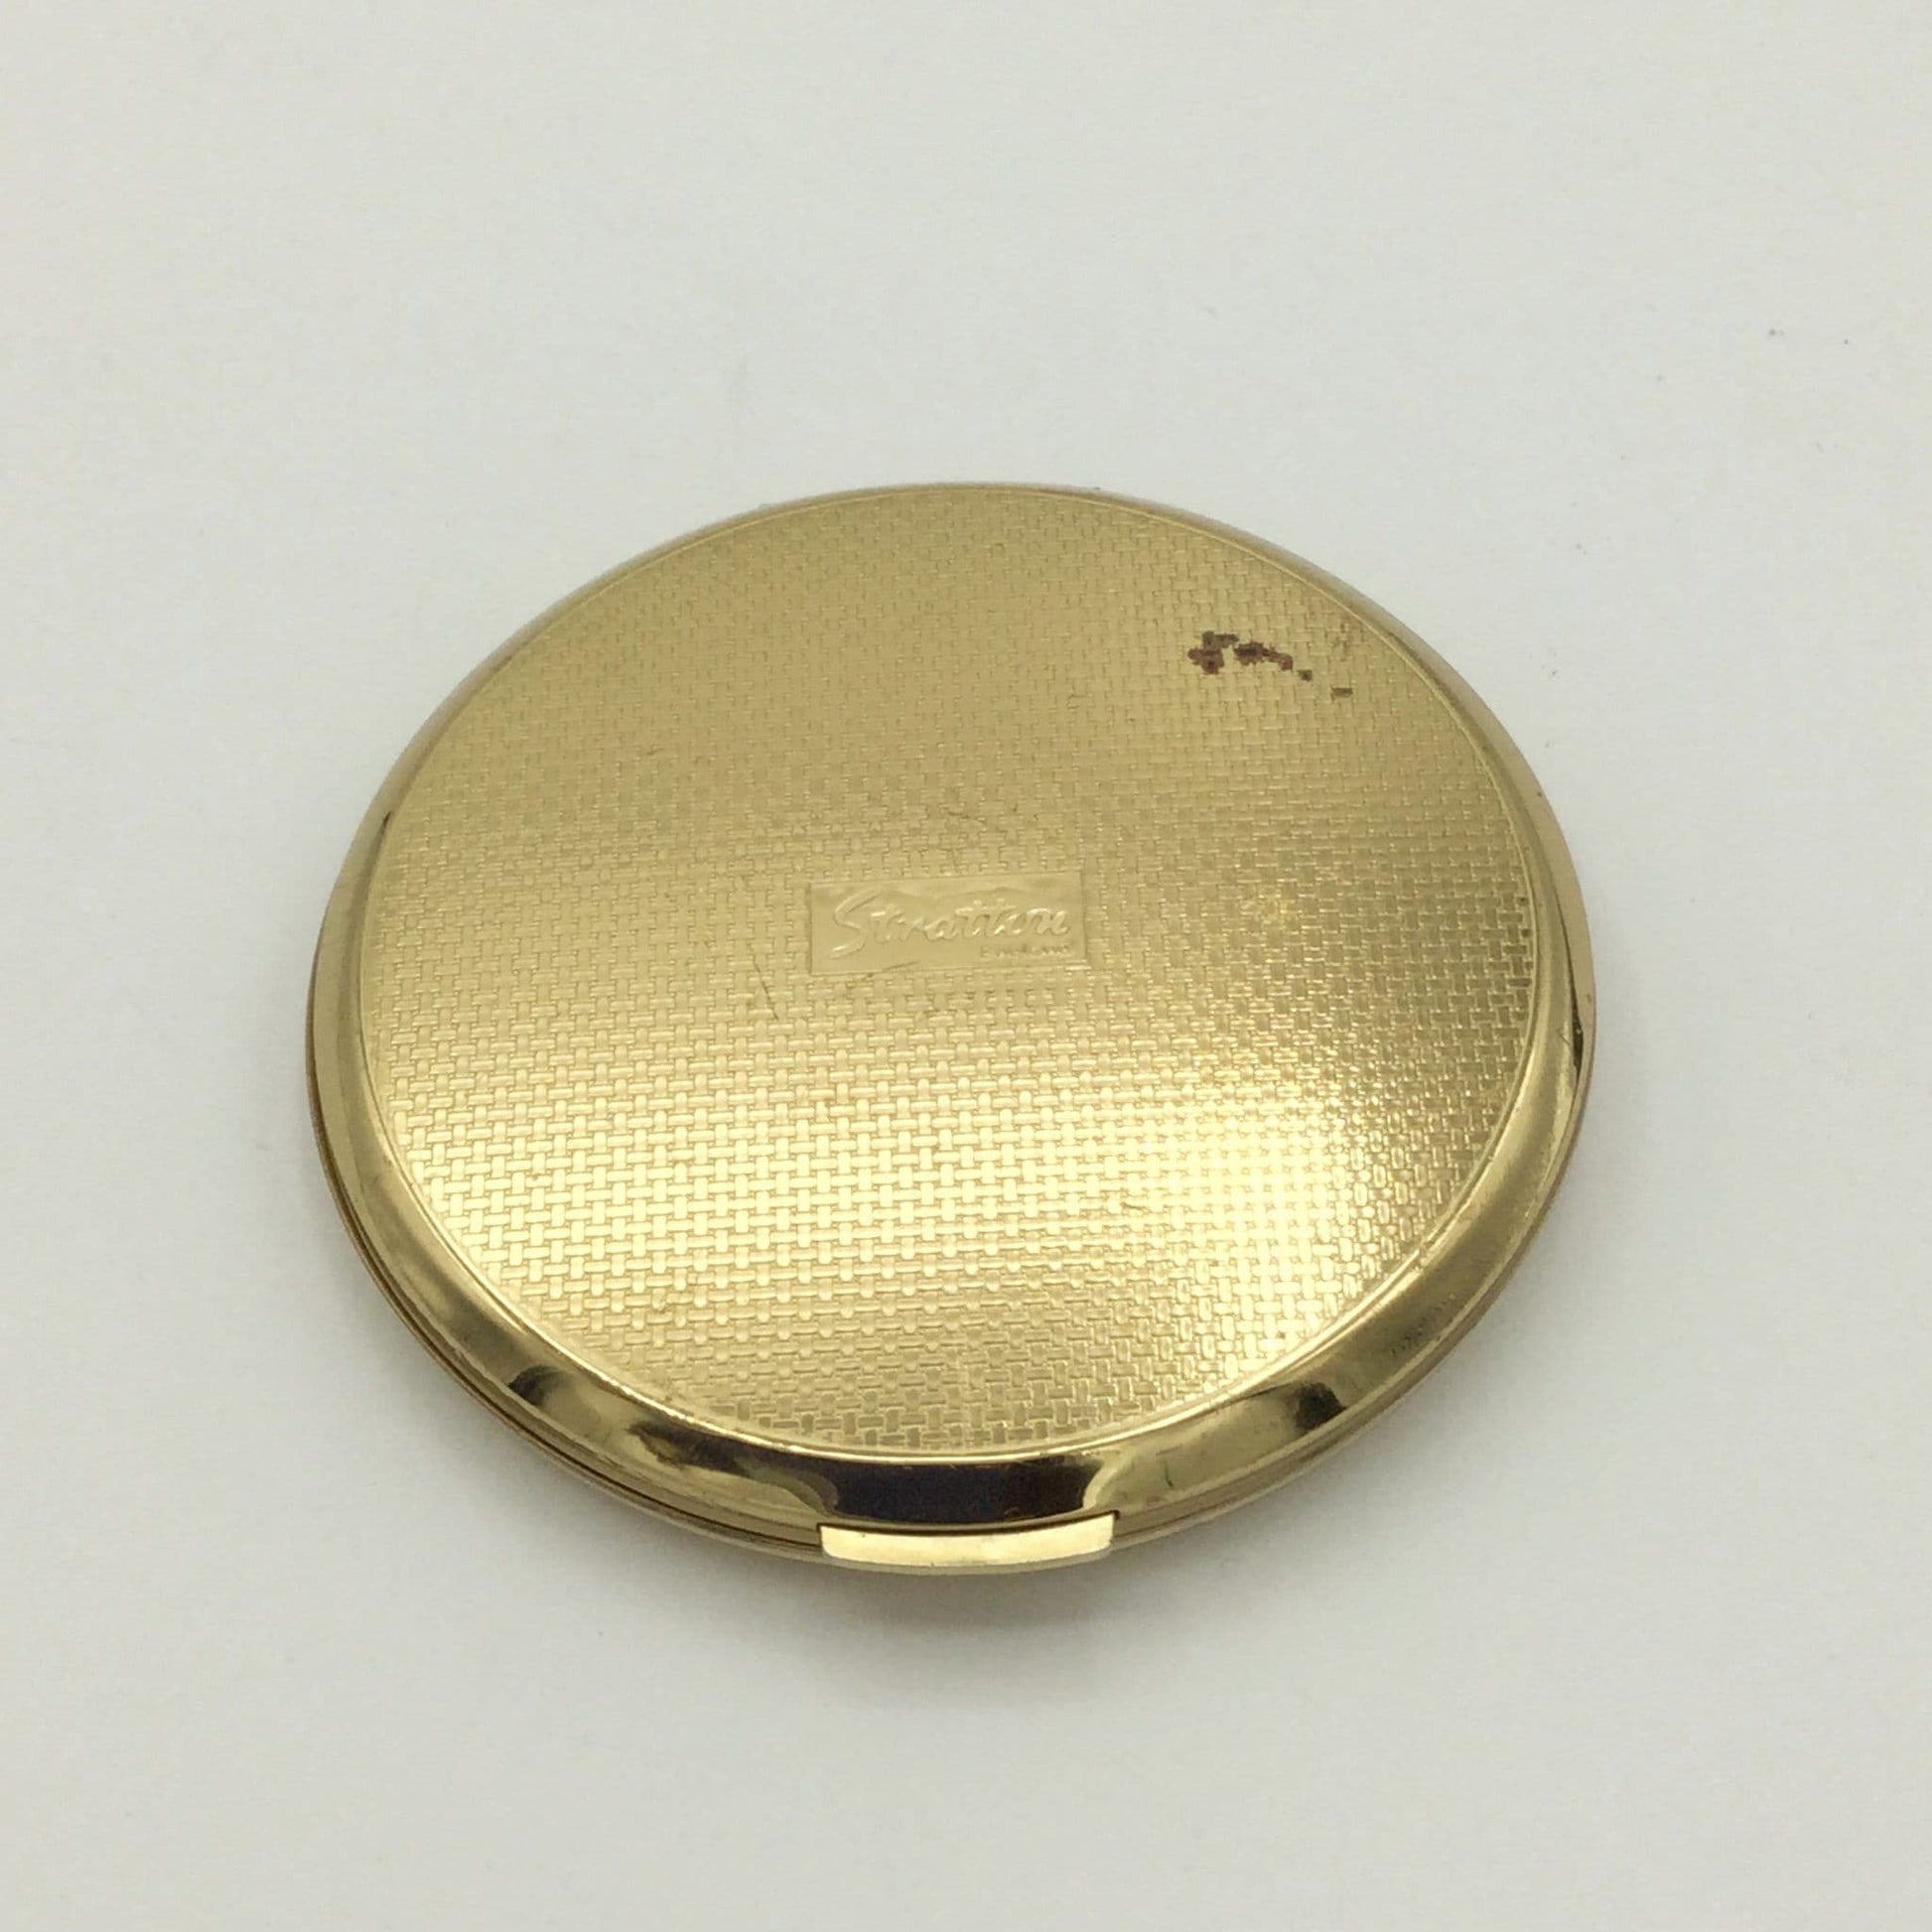 Golden woven base of a Stratton powder compact